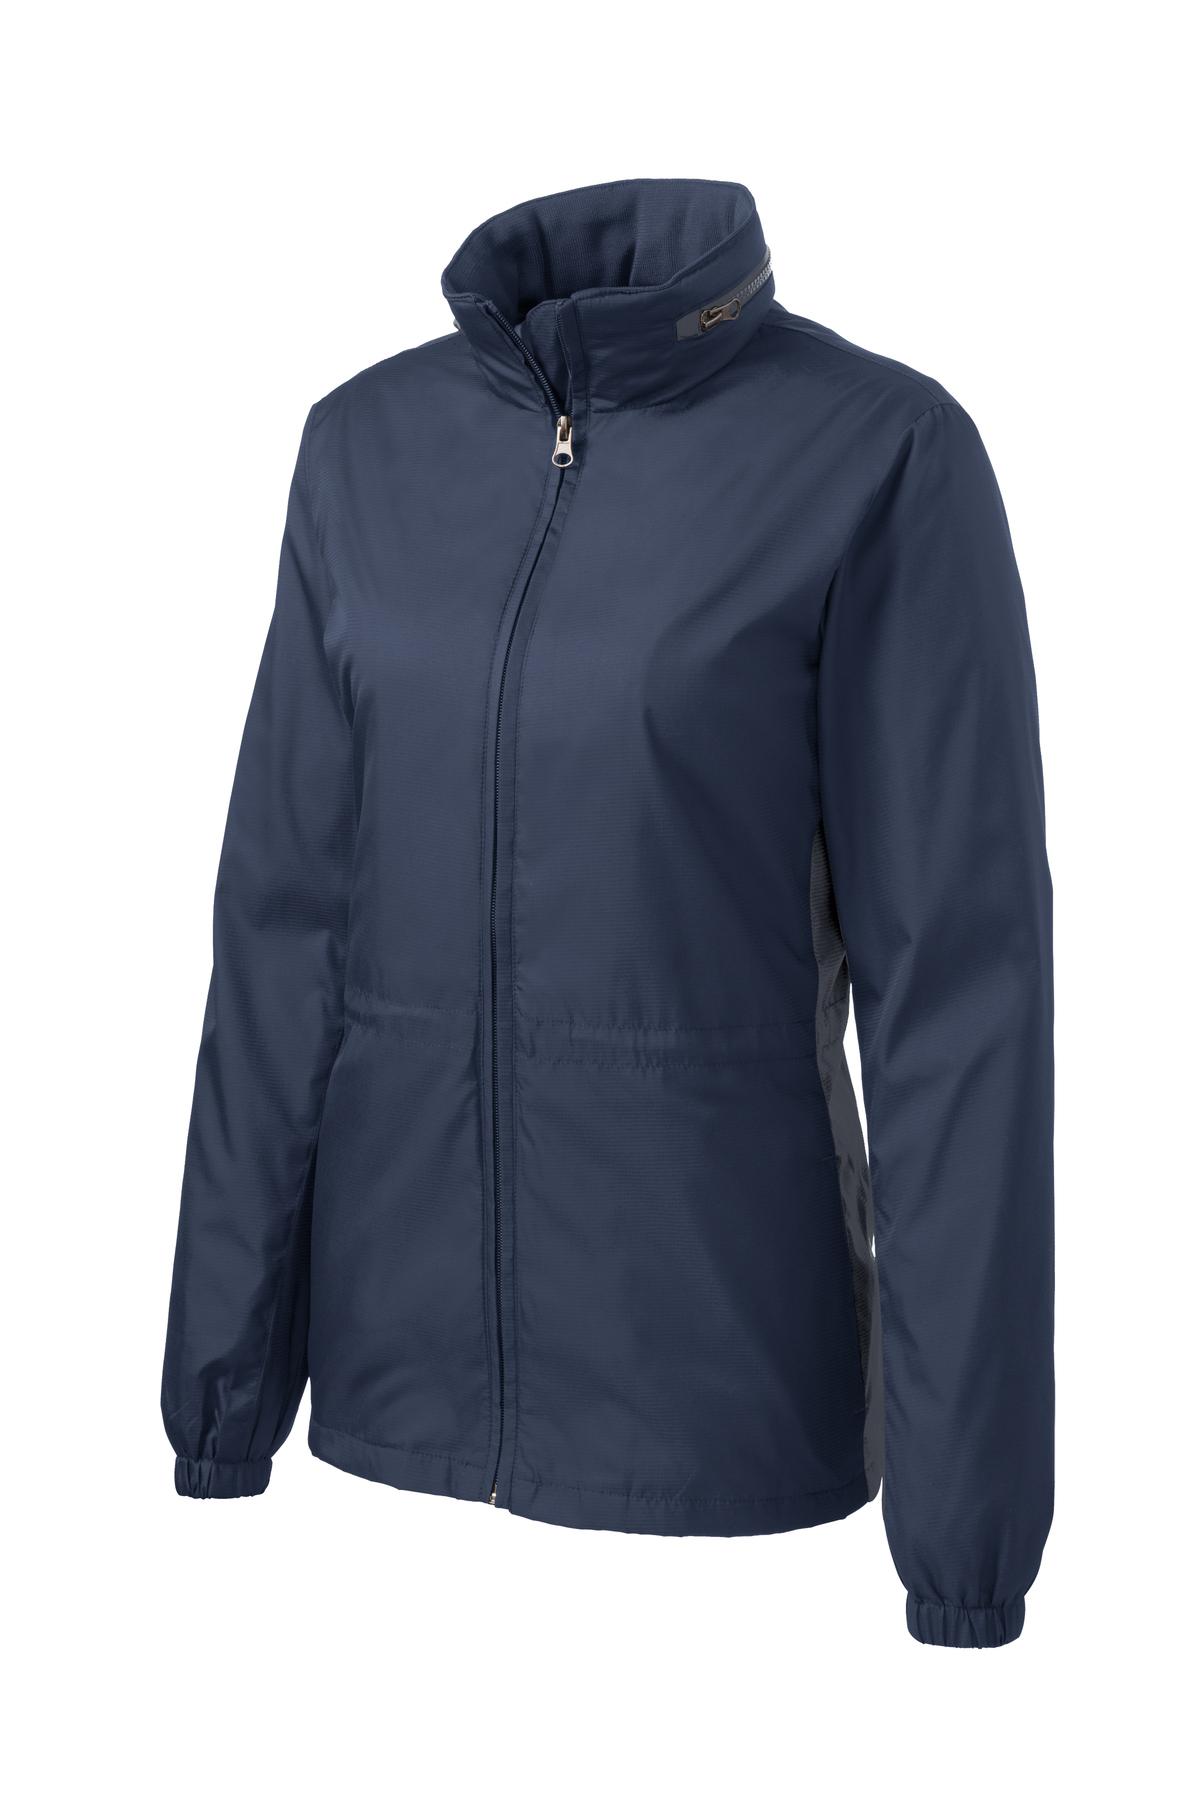 Port Authority ® Ladies Core Colorblock Wind Jacket | Product | SanMar